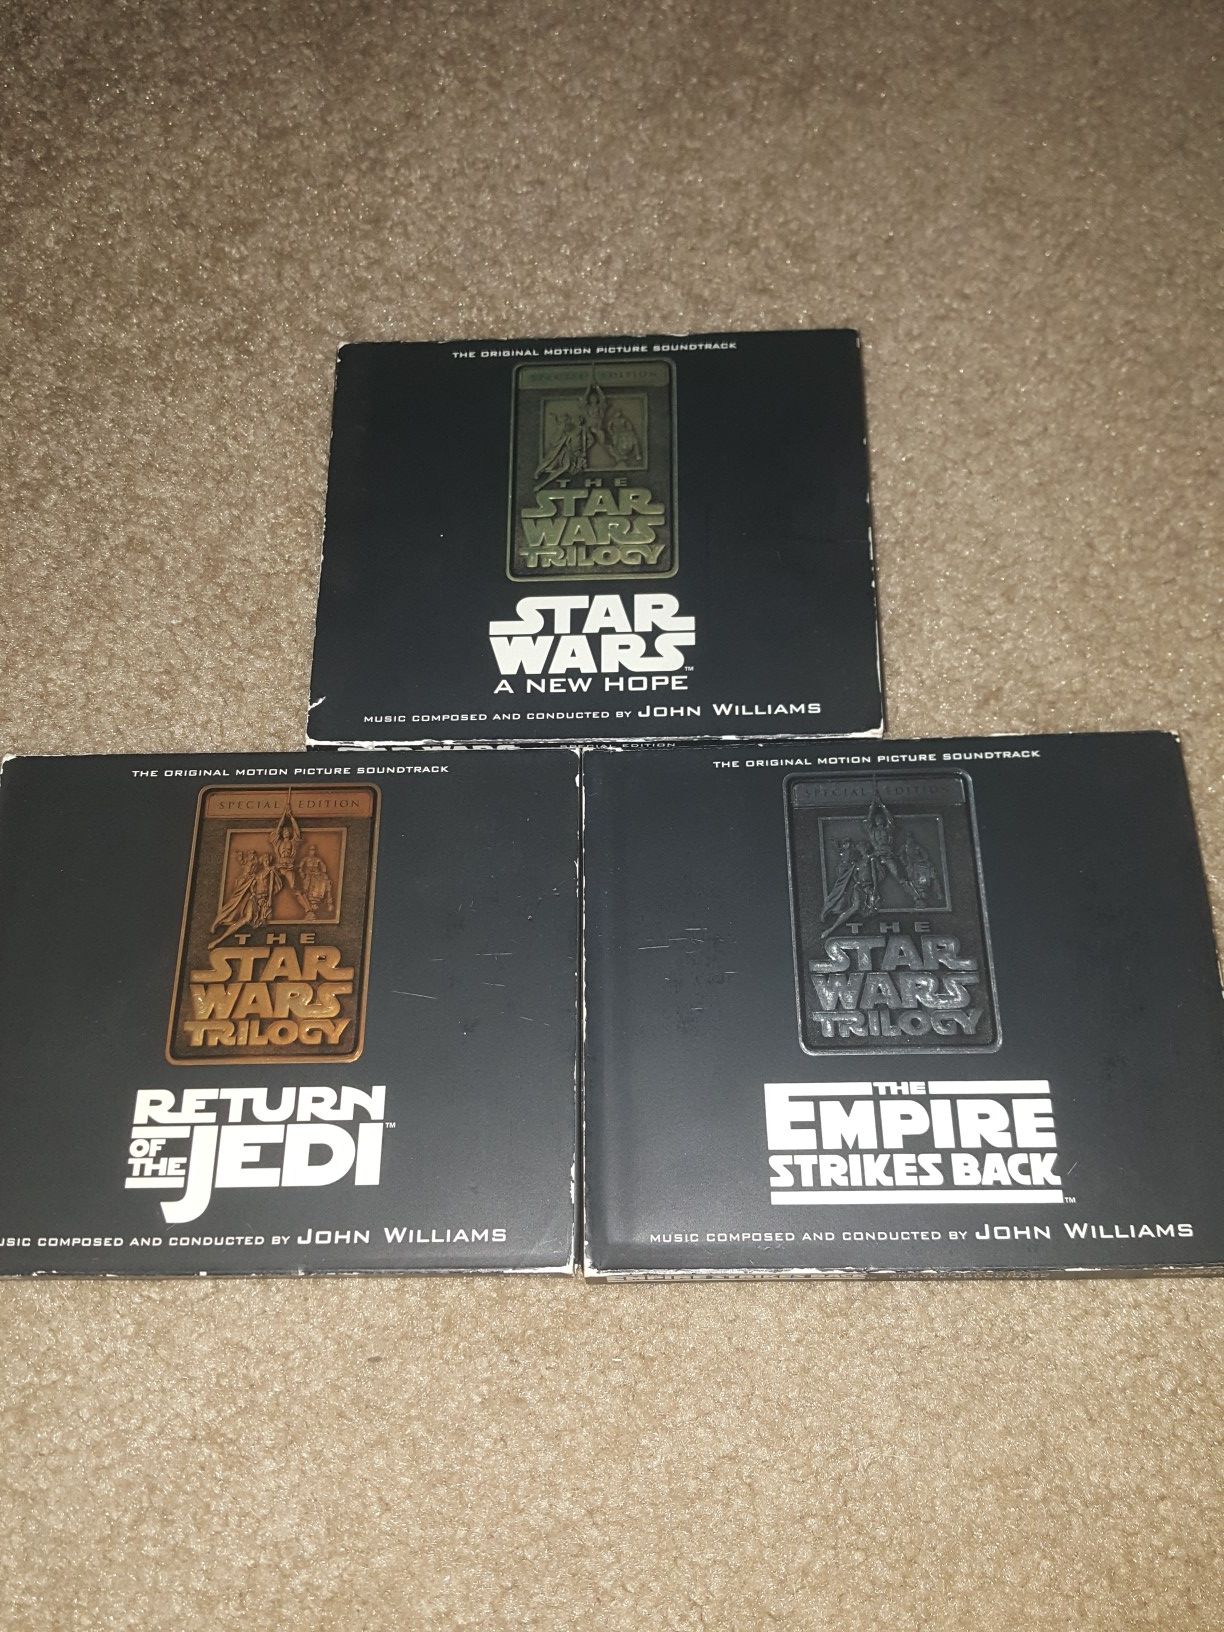 Star Wars CD Soundtracks